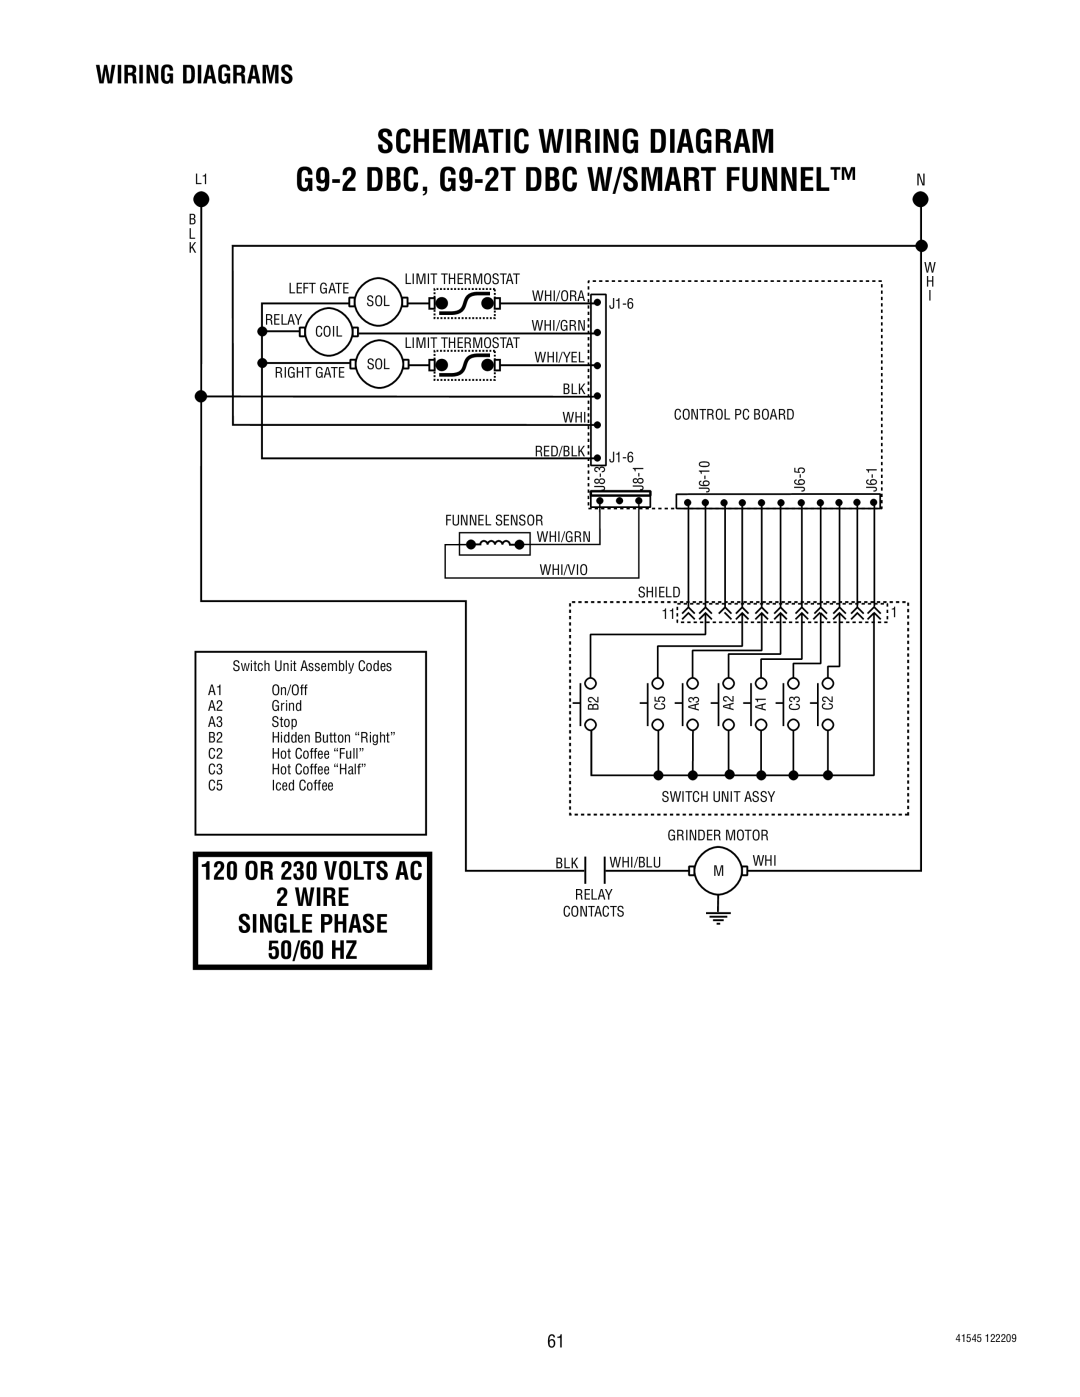 Bunn G9-2T DBC Schematic Wiring Diagram, G9-2DBC, G9-2TDBC W/SMART FUNNEL, Wiring Diagrams, 2WIRE SINGLE PHASE 50/60 HZ 